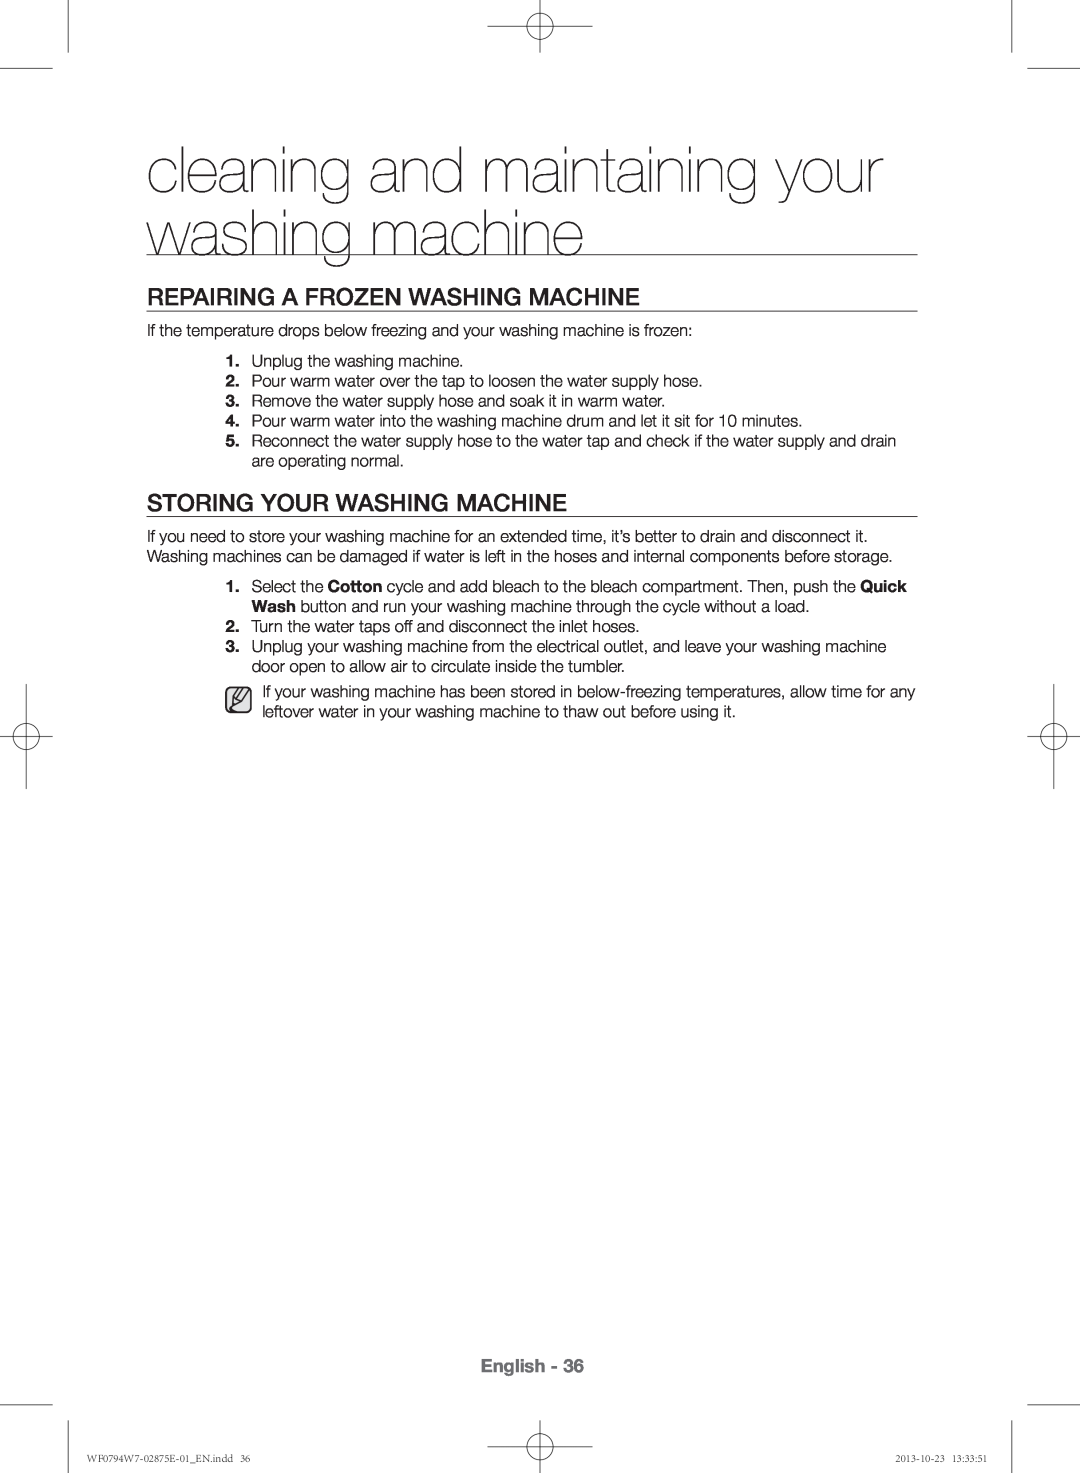 Samsung WF0794W7E9/XSV manual cleaning and maintaining your washing machine, Repairing a frozen washing machine, English 